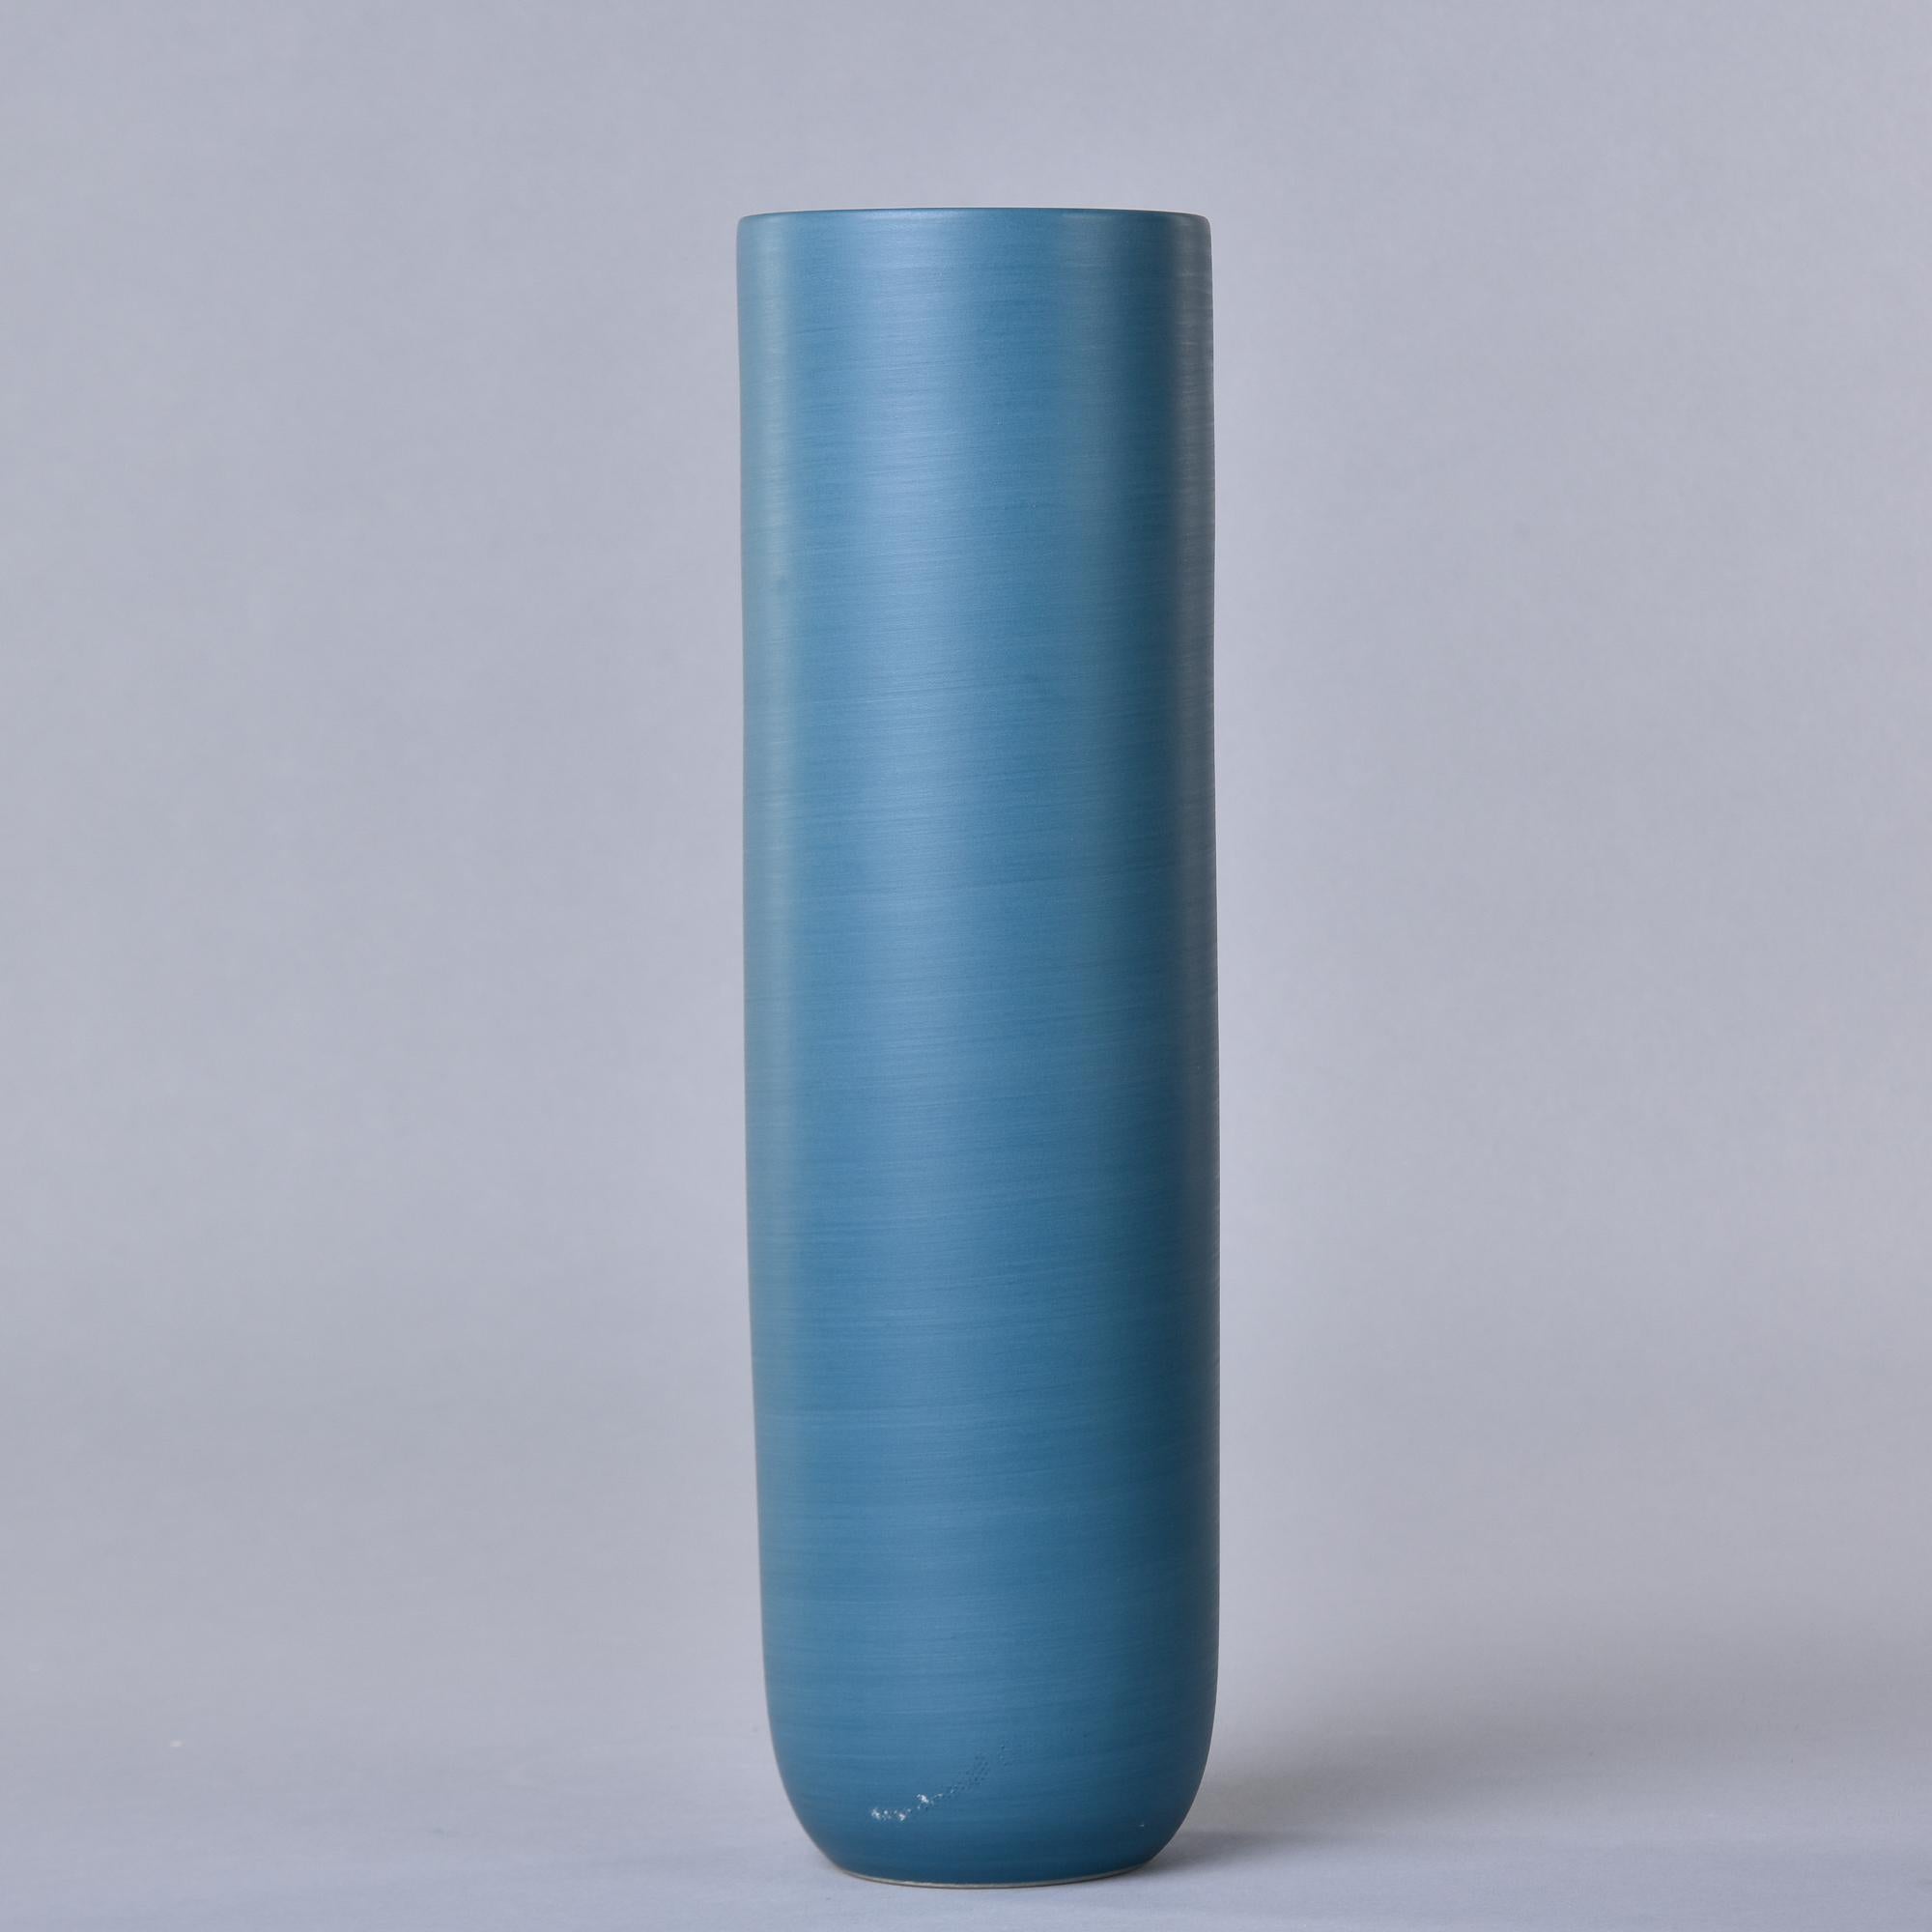 Glazed New Rina Menardi Canna 2 Vase in Teal Blue For Sale